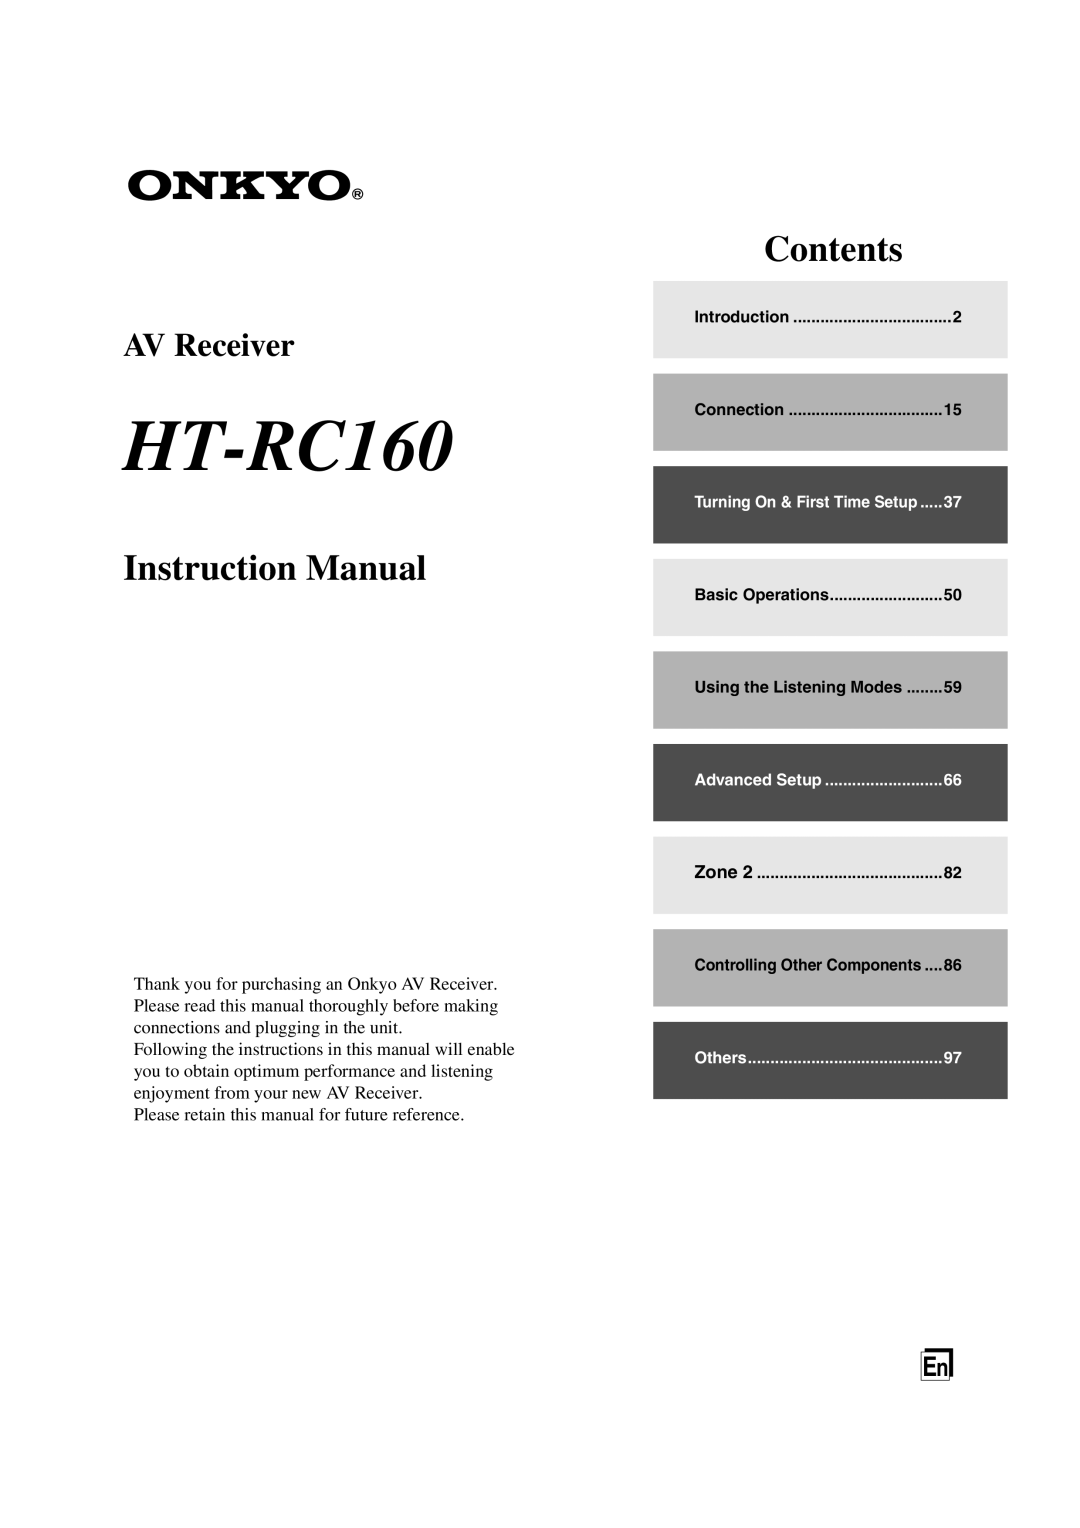 Onkyo HT-RC160 instruction manual Instruction Manual, Contents, AV Receiver 